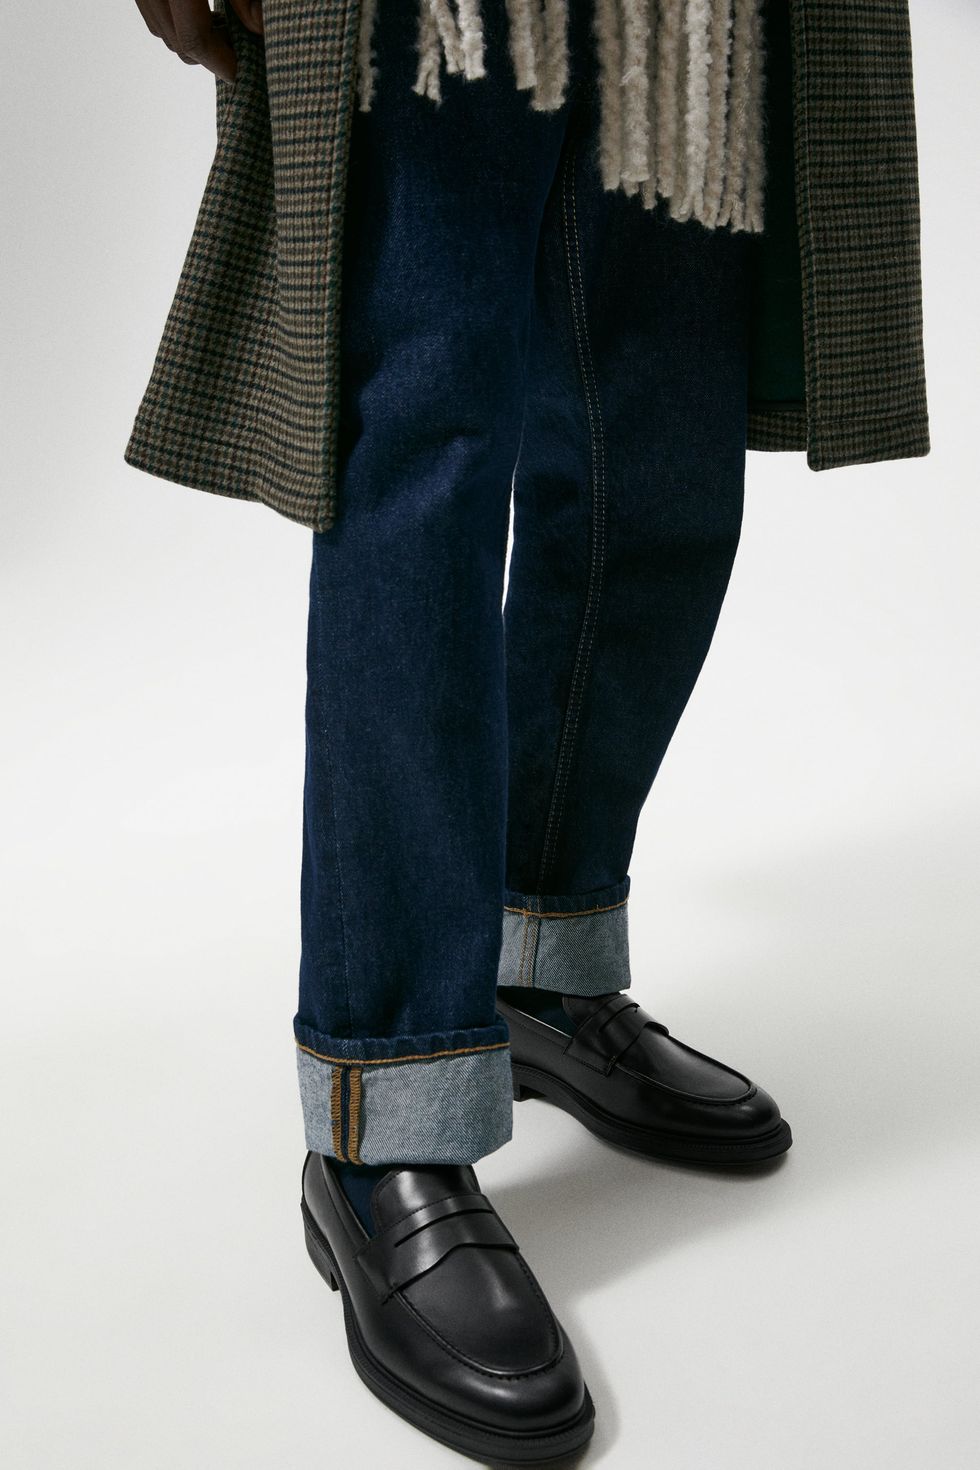 Las mejores ofertas en Zapatos informales para hombre Louis Vuitton azules